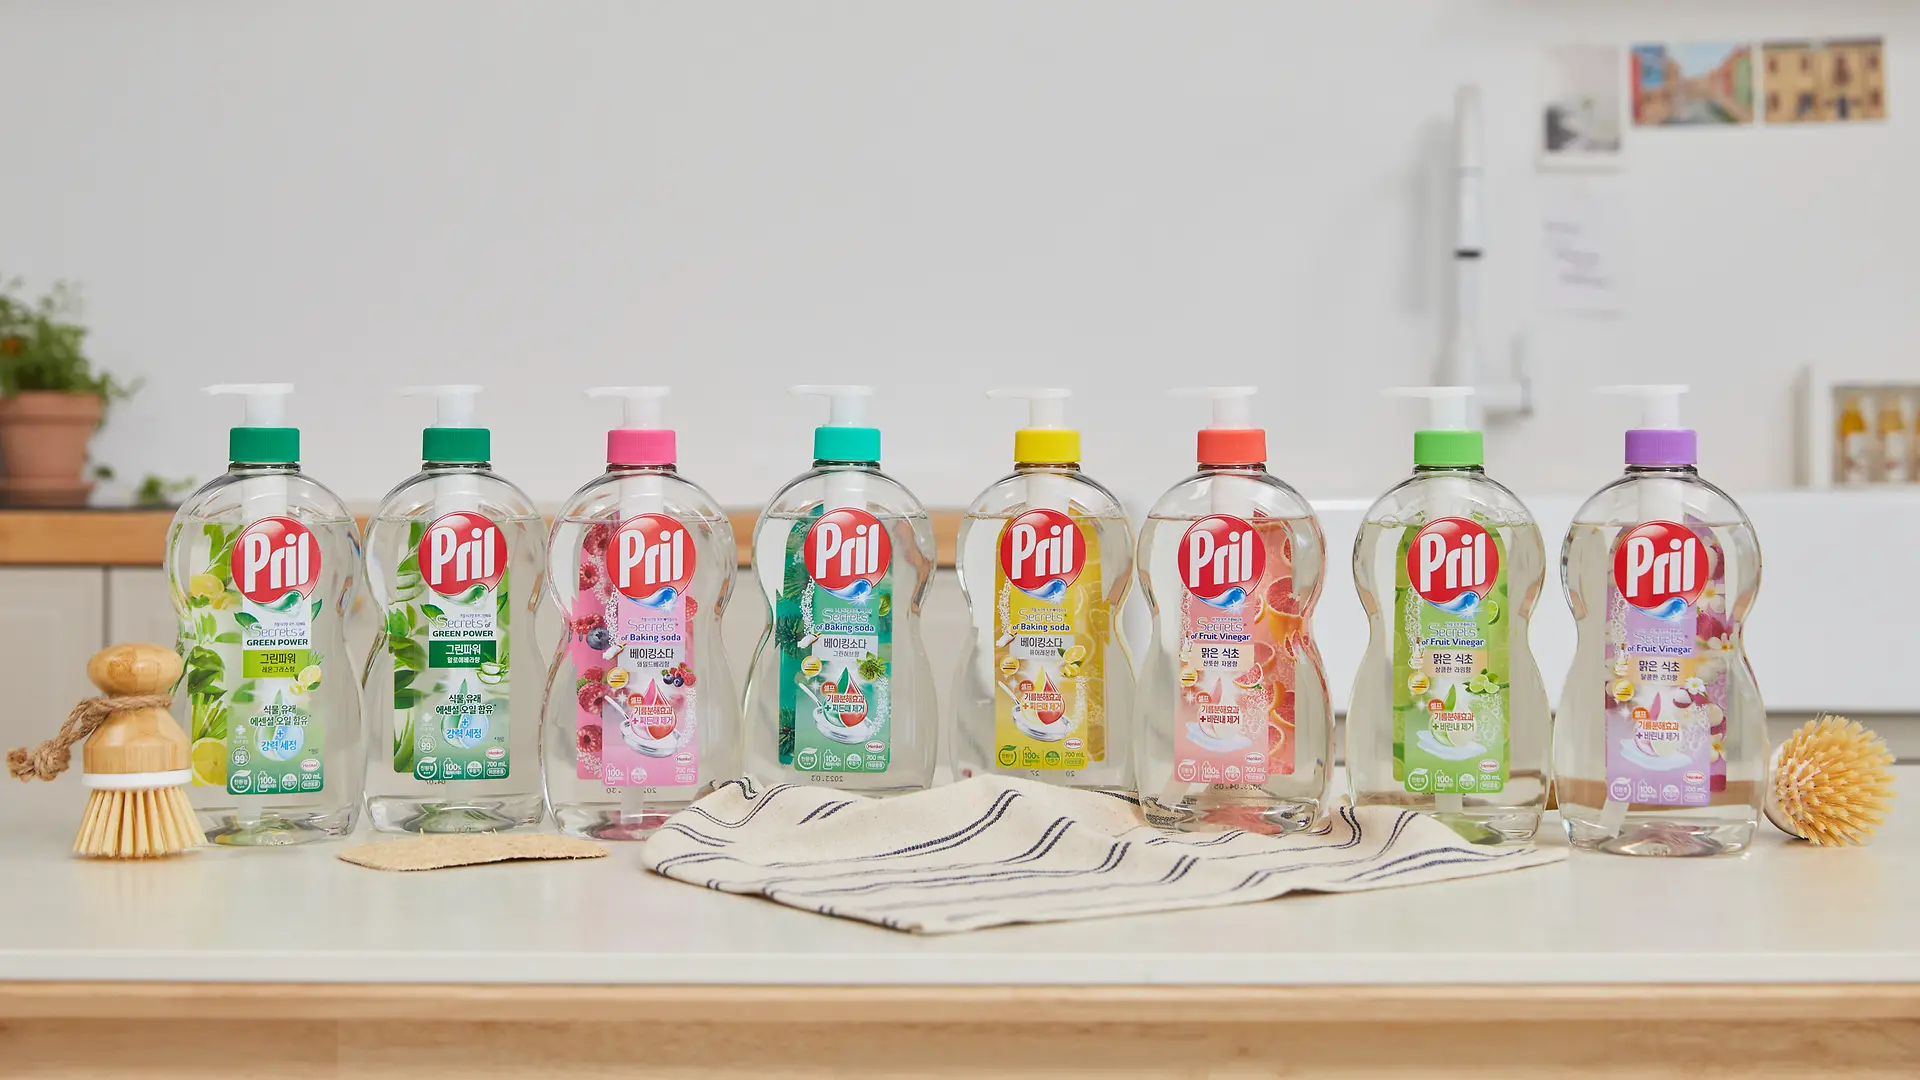 Pril Product bottles